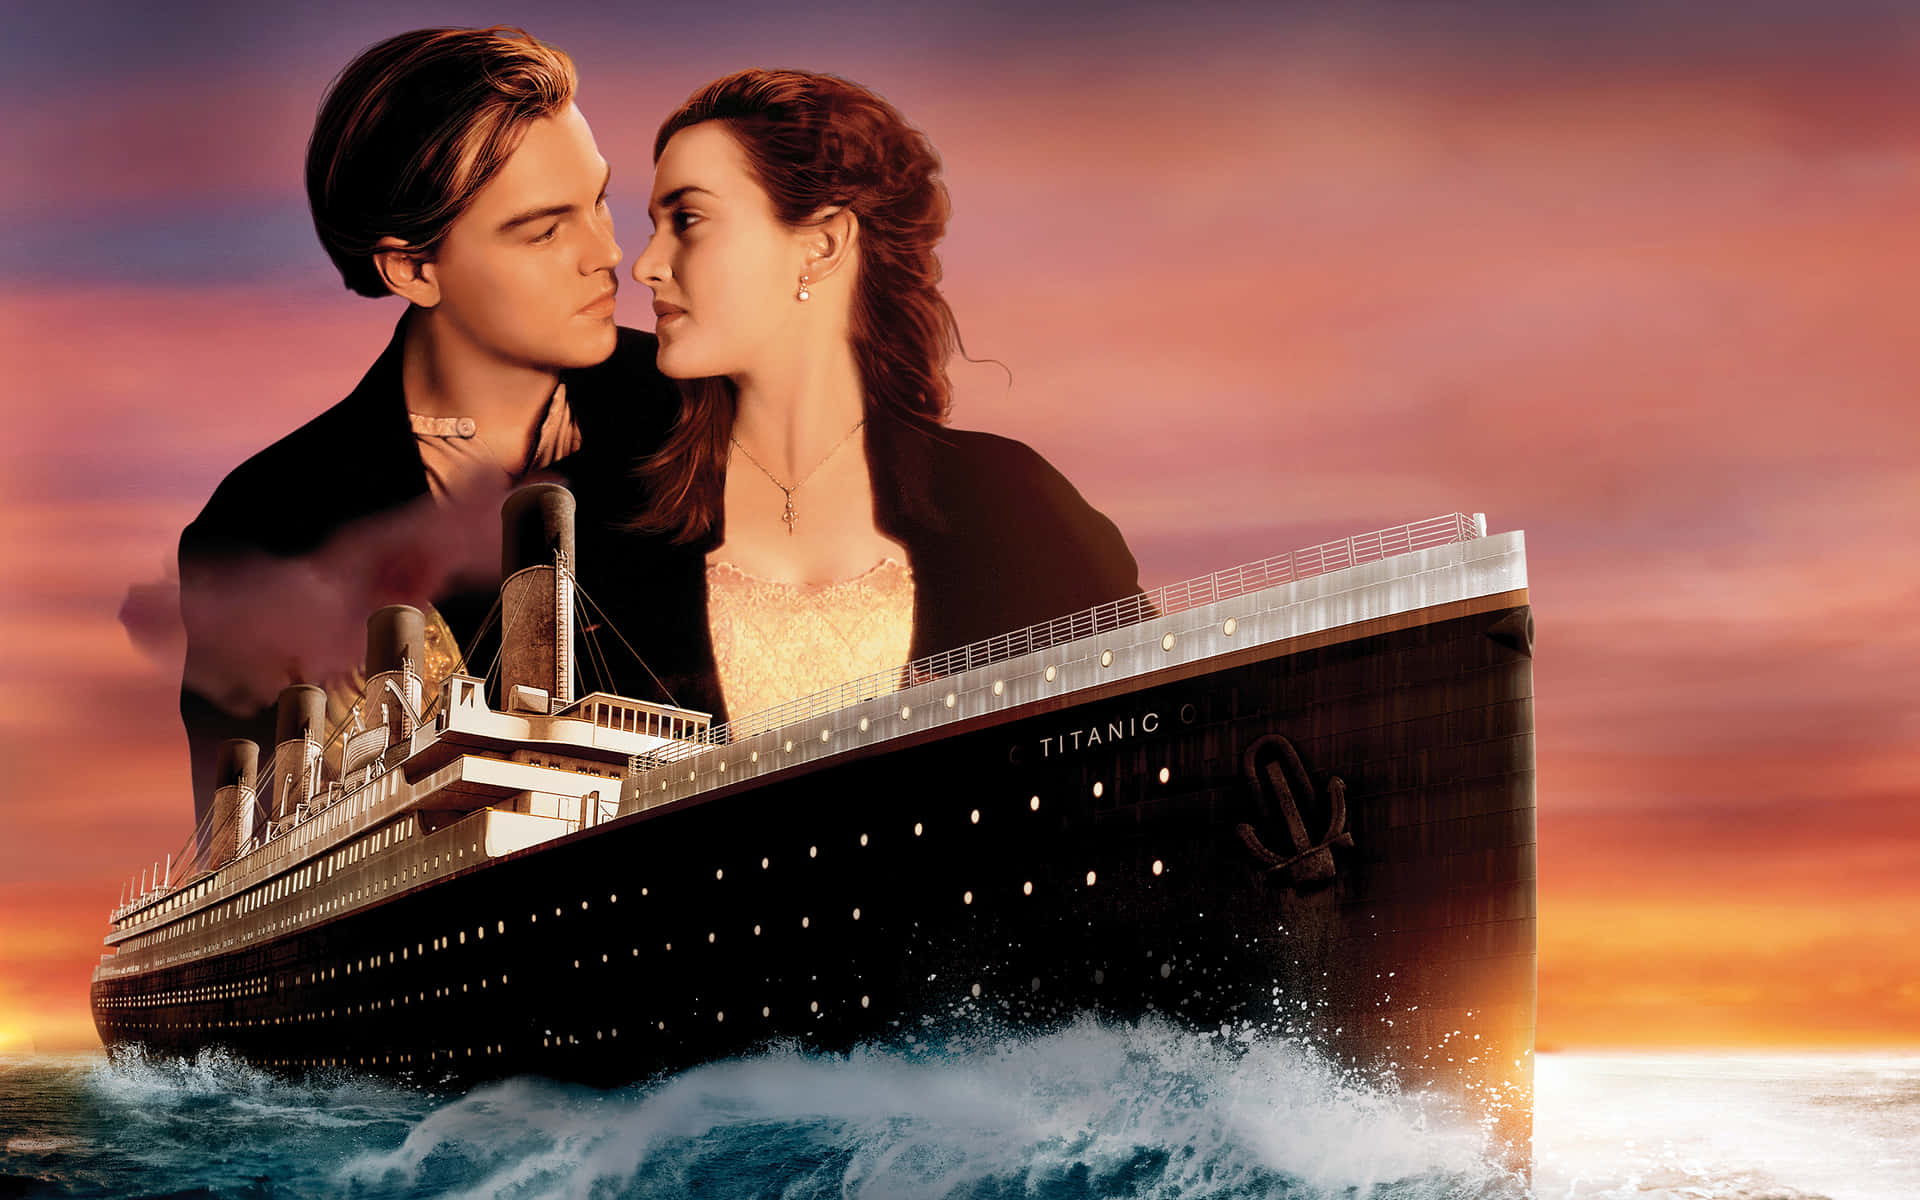 The historic Titanic slowly sinking in the Atlantic Ocean